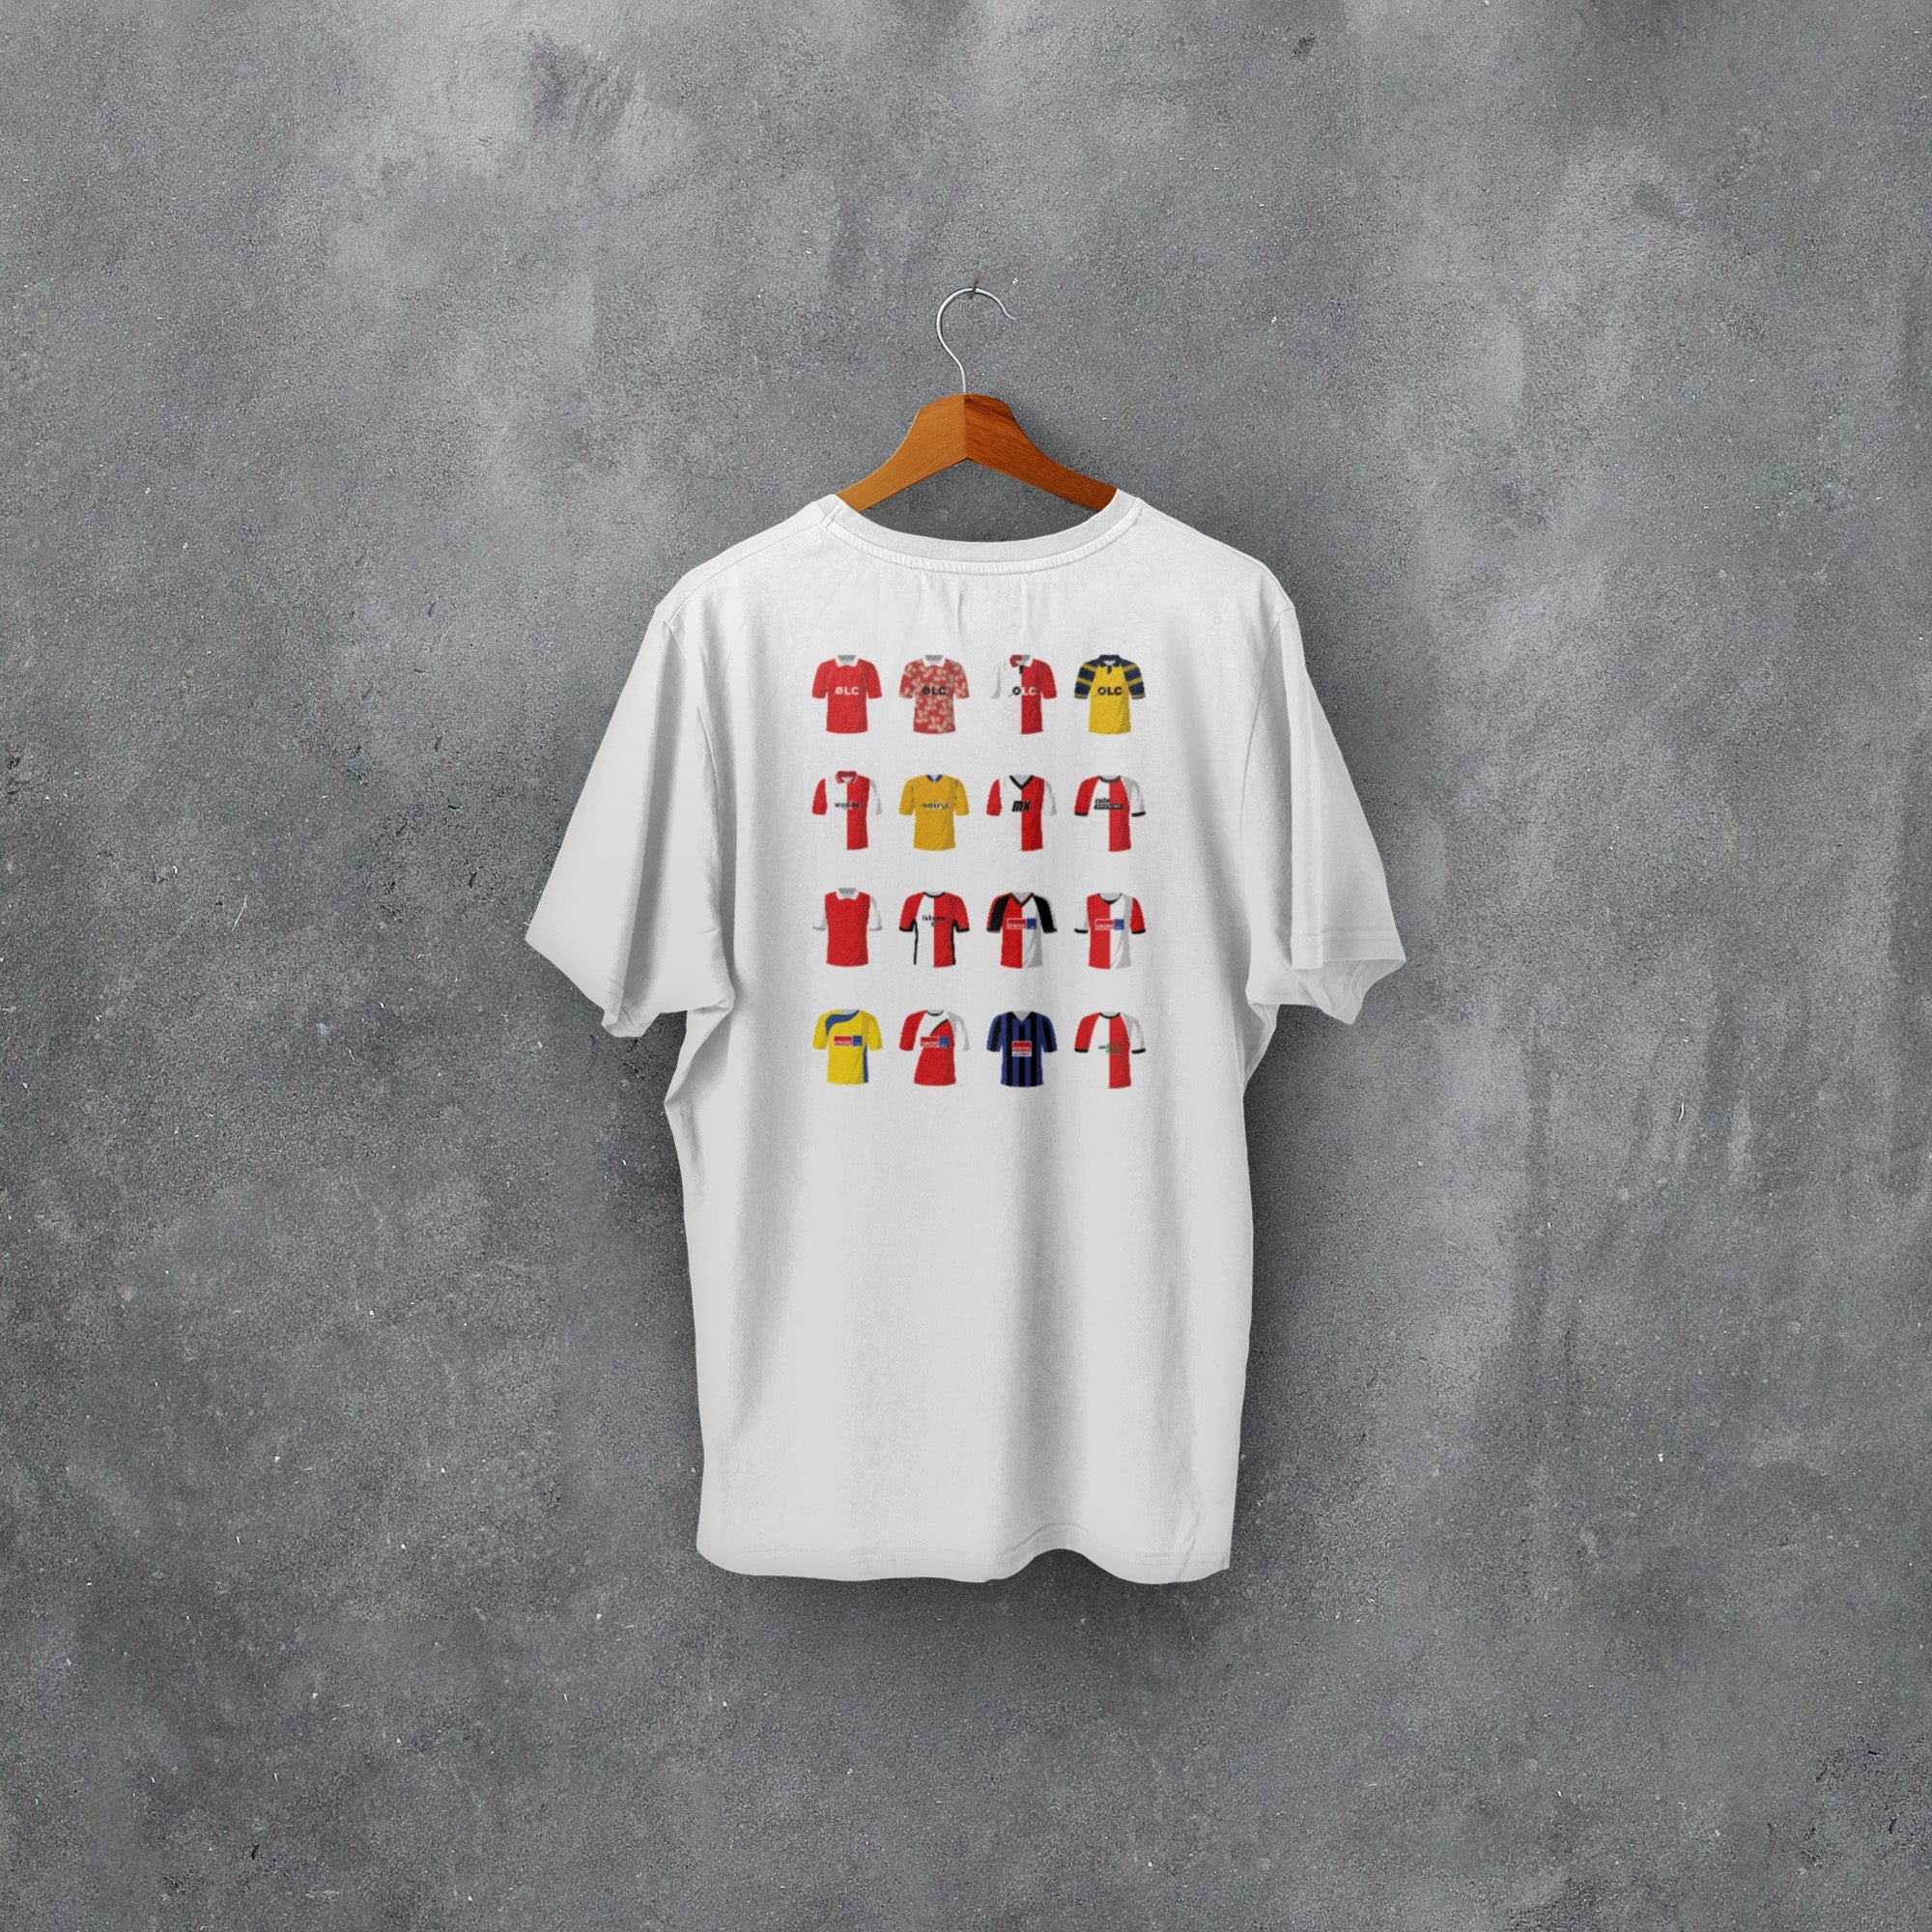 Woking Classic Kits Football T-Shirt